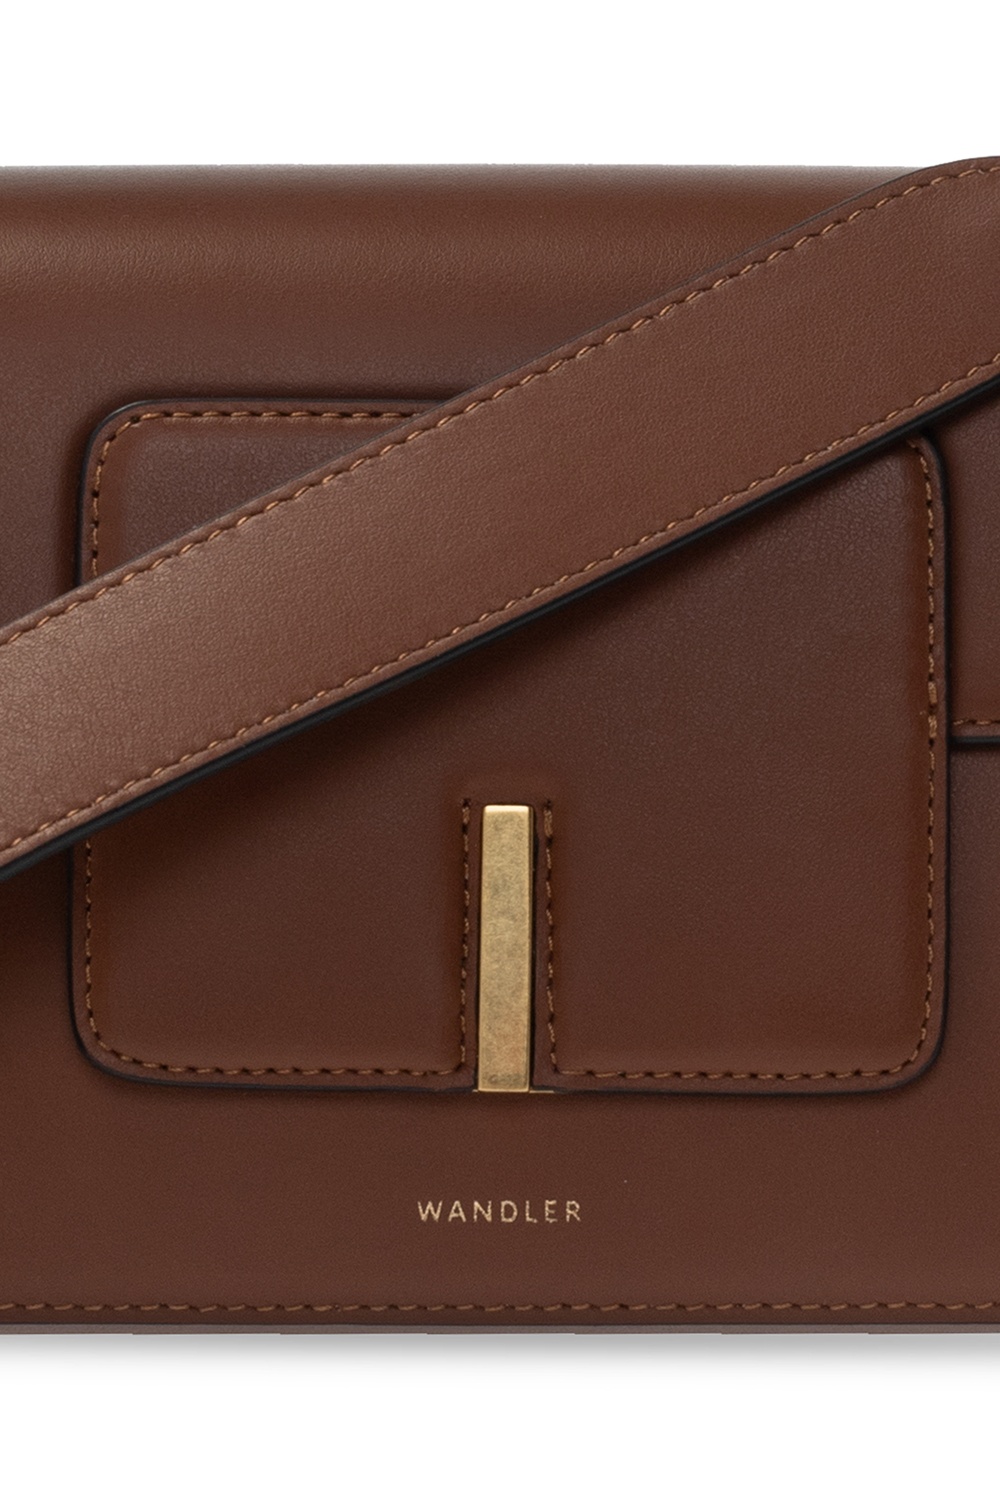 Wandler ‘Georgia’ shoulder Craghoppers bag